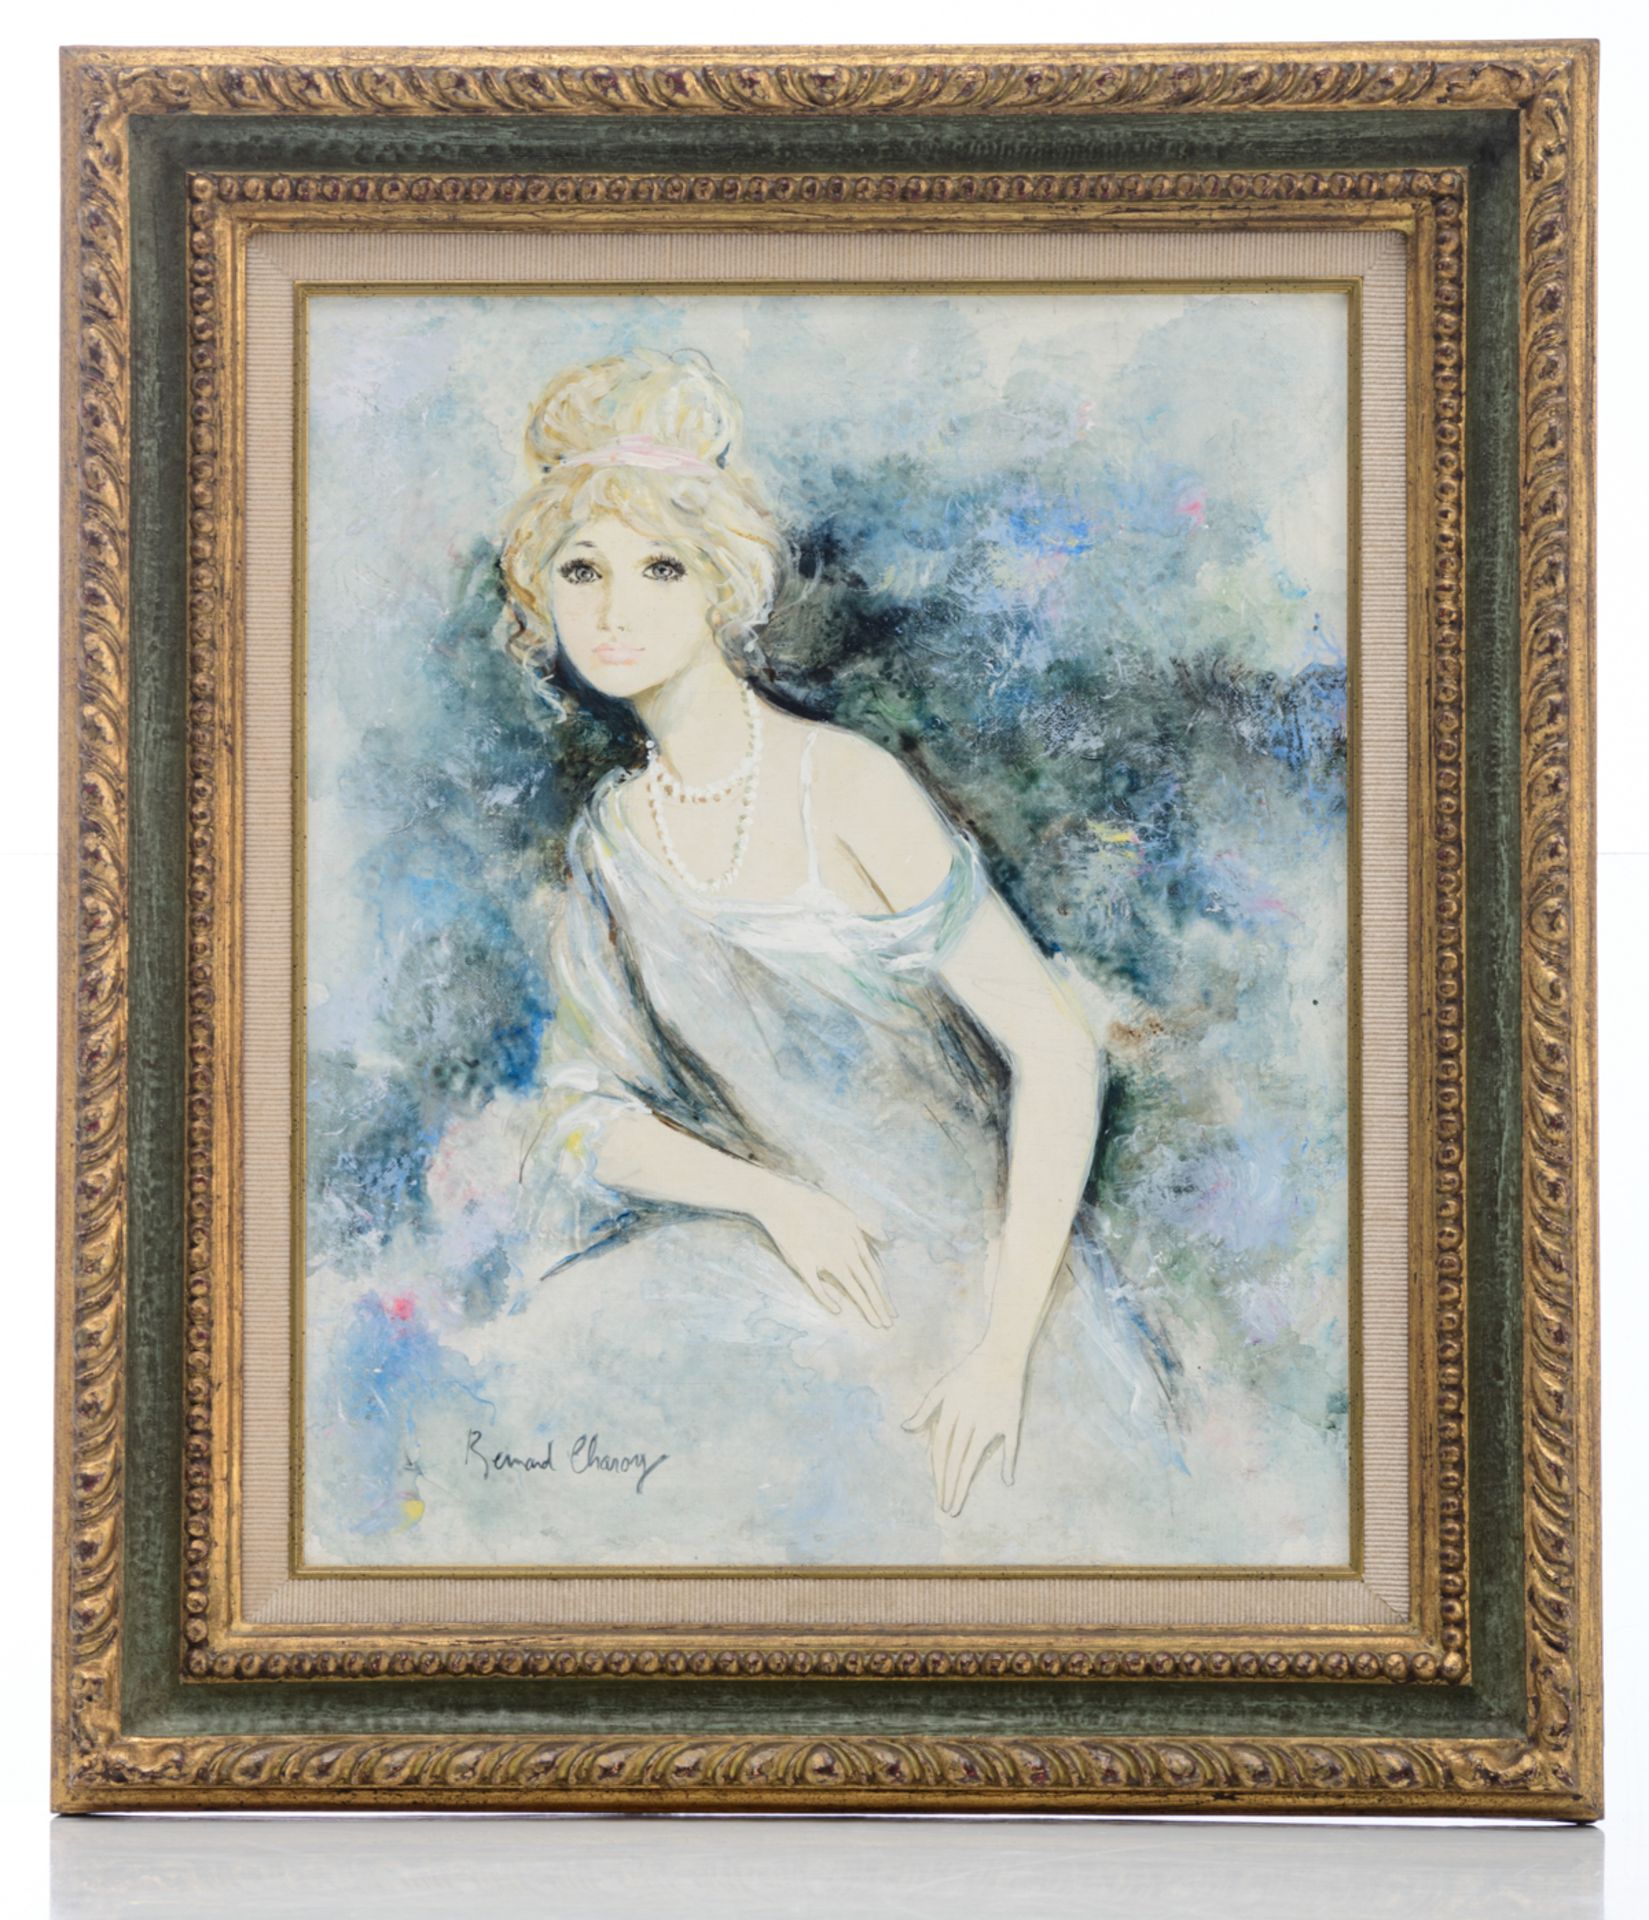 Charoy B., 'Caroline', dated 1980, oil on canvas, 38 x 56 cm Is possibly subject of the SABAM legisl - Bild 2 aus 5